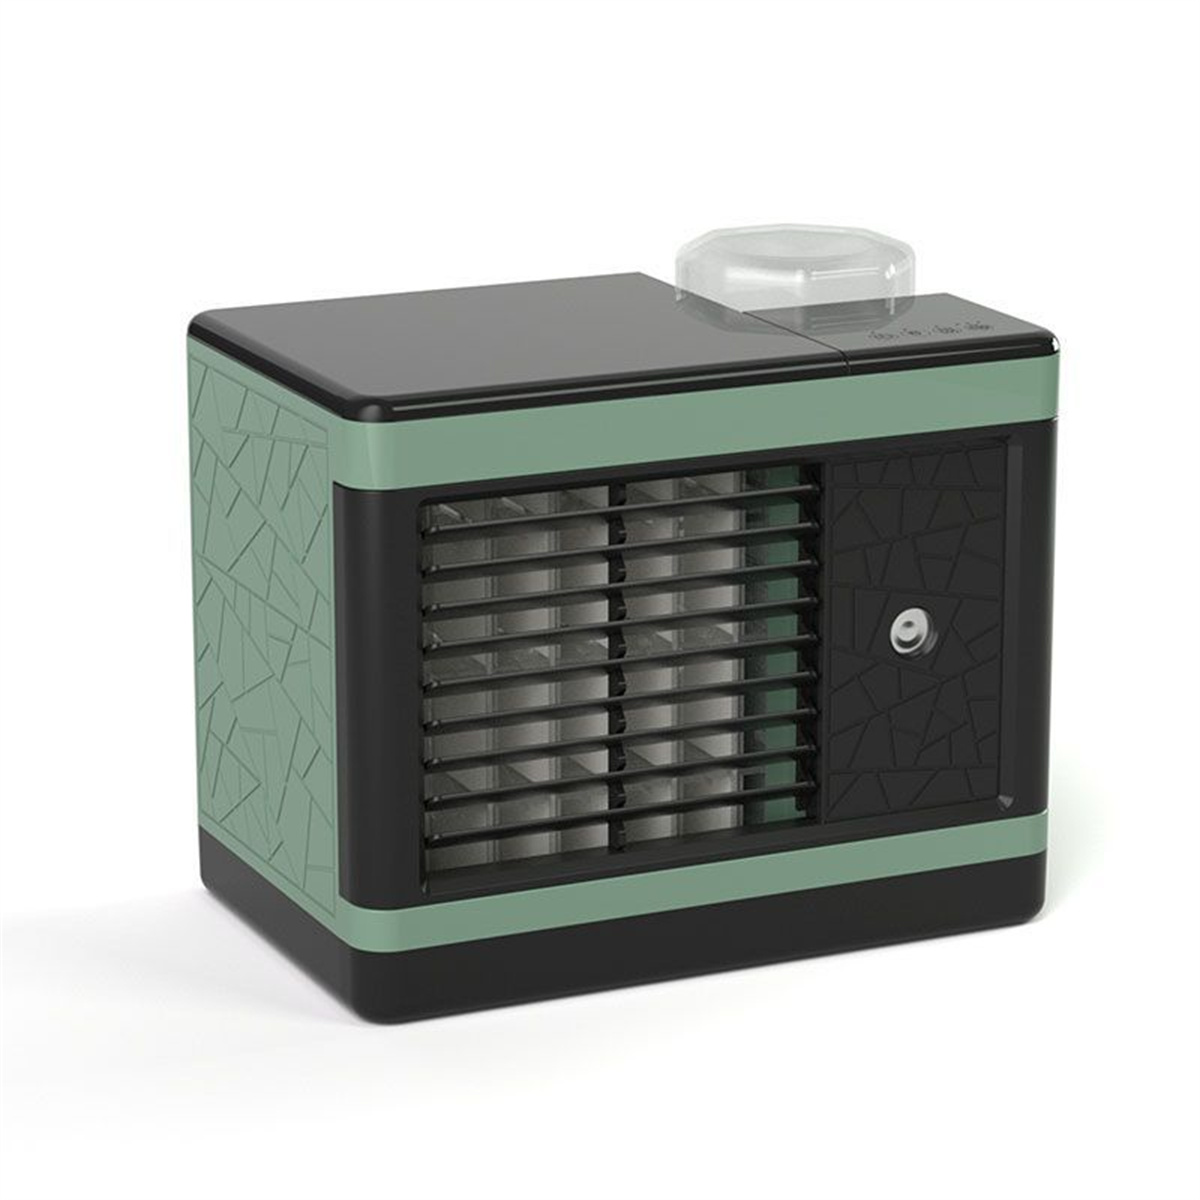 Befeuchteter Grün tragbarer SYNTEK Fan Green Kompaktventilator Desktop-Kühler